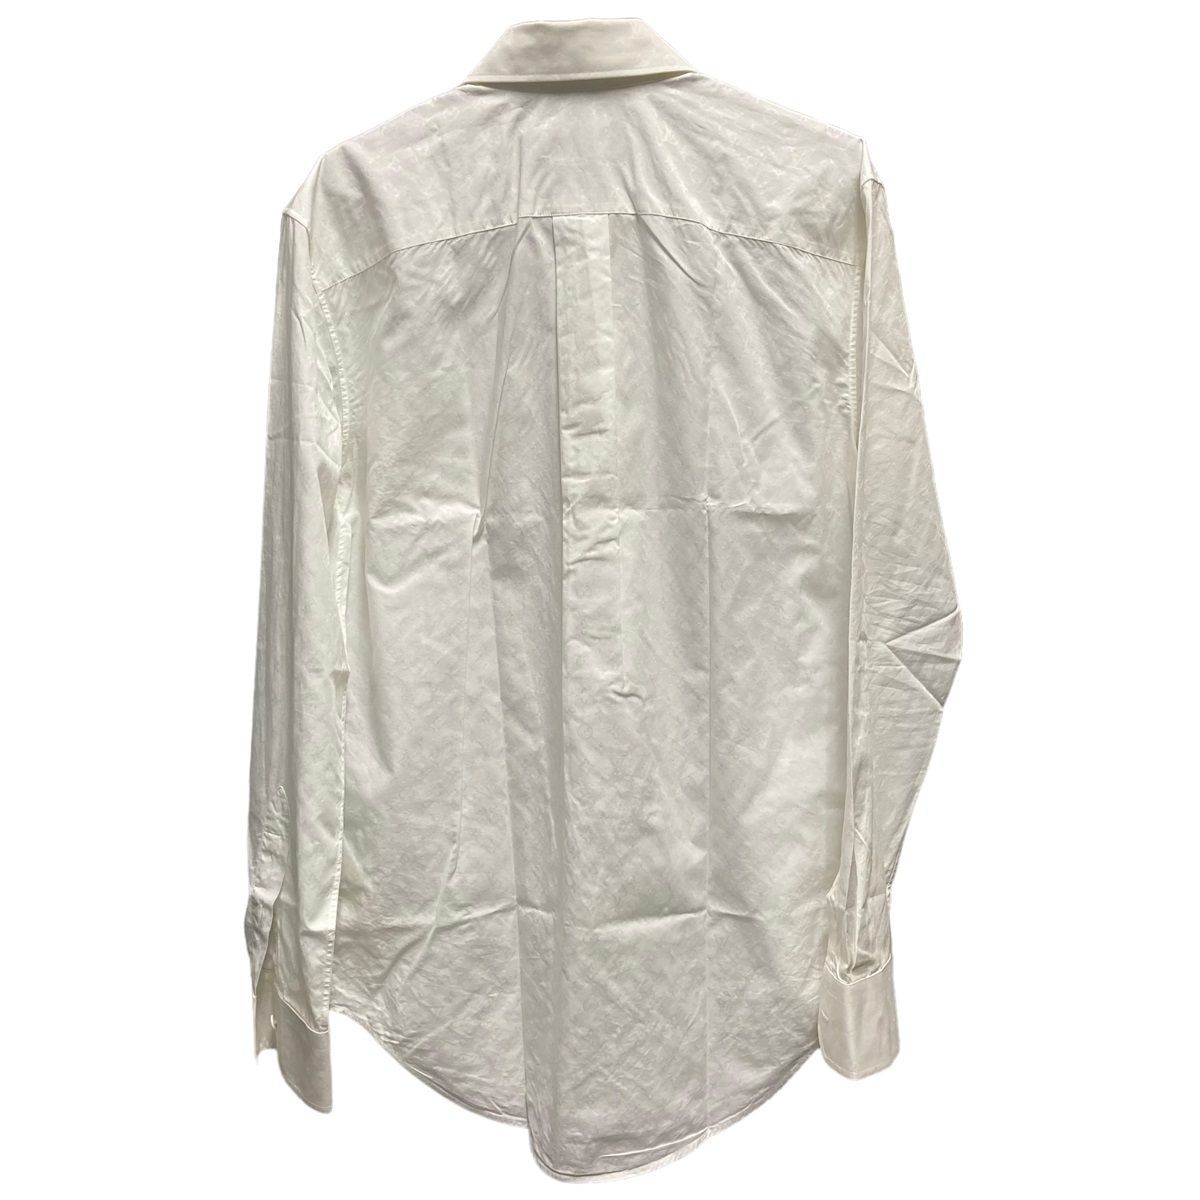 [ used ] LOUIS VUITTON Louis * Vuitton 21AW monogram total pattern long sleeve shirt RM212Q XS size 23030326 AS